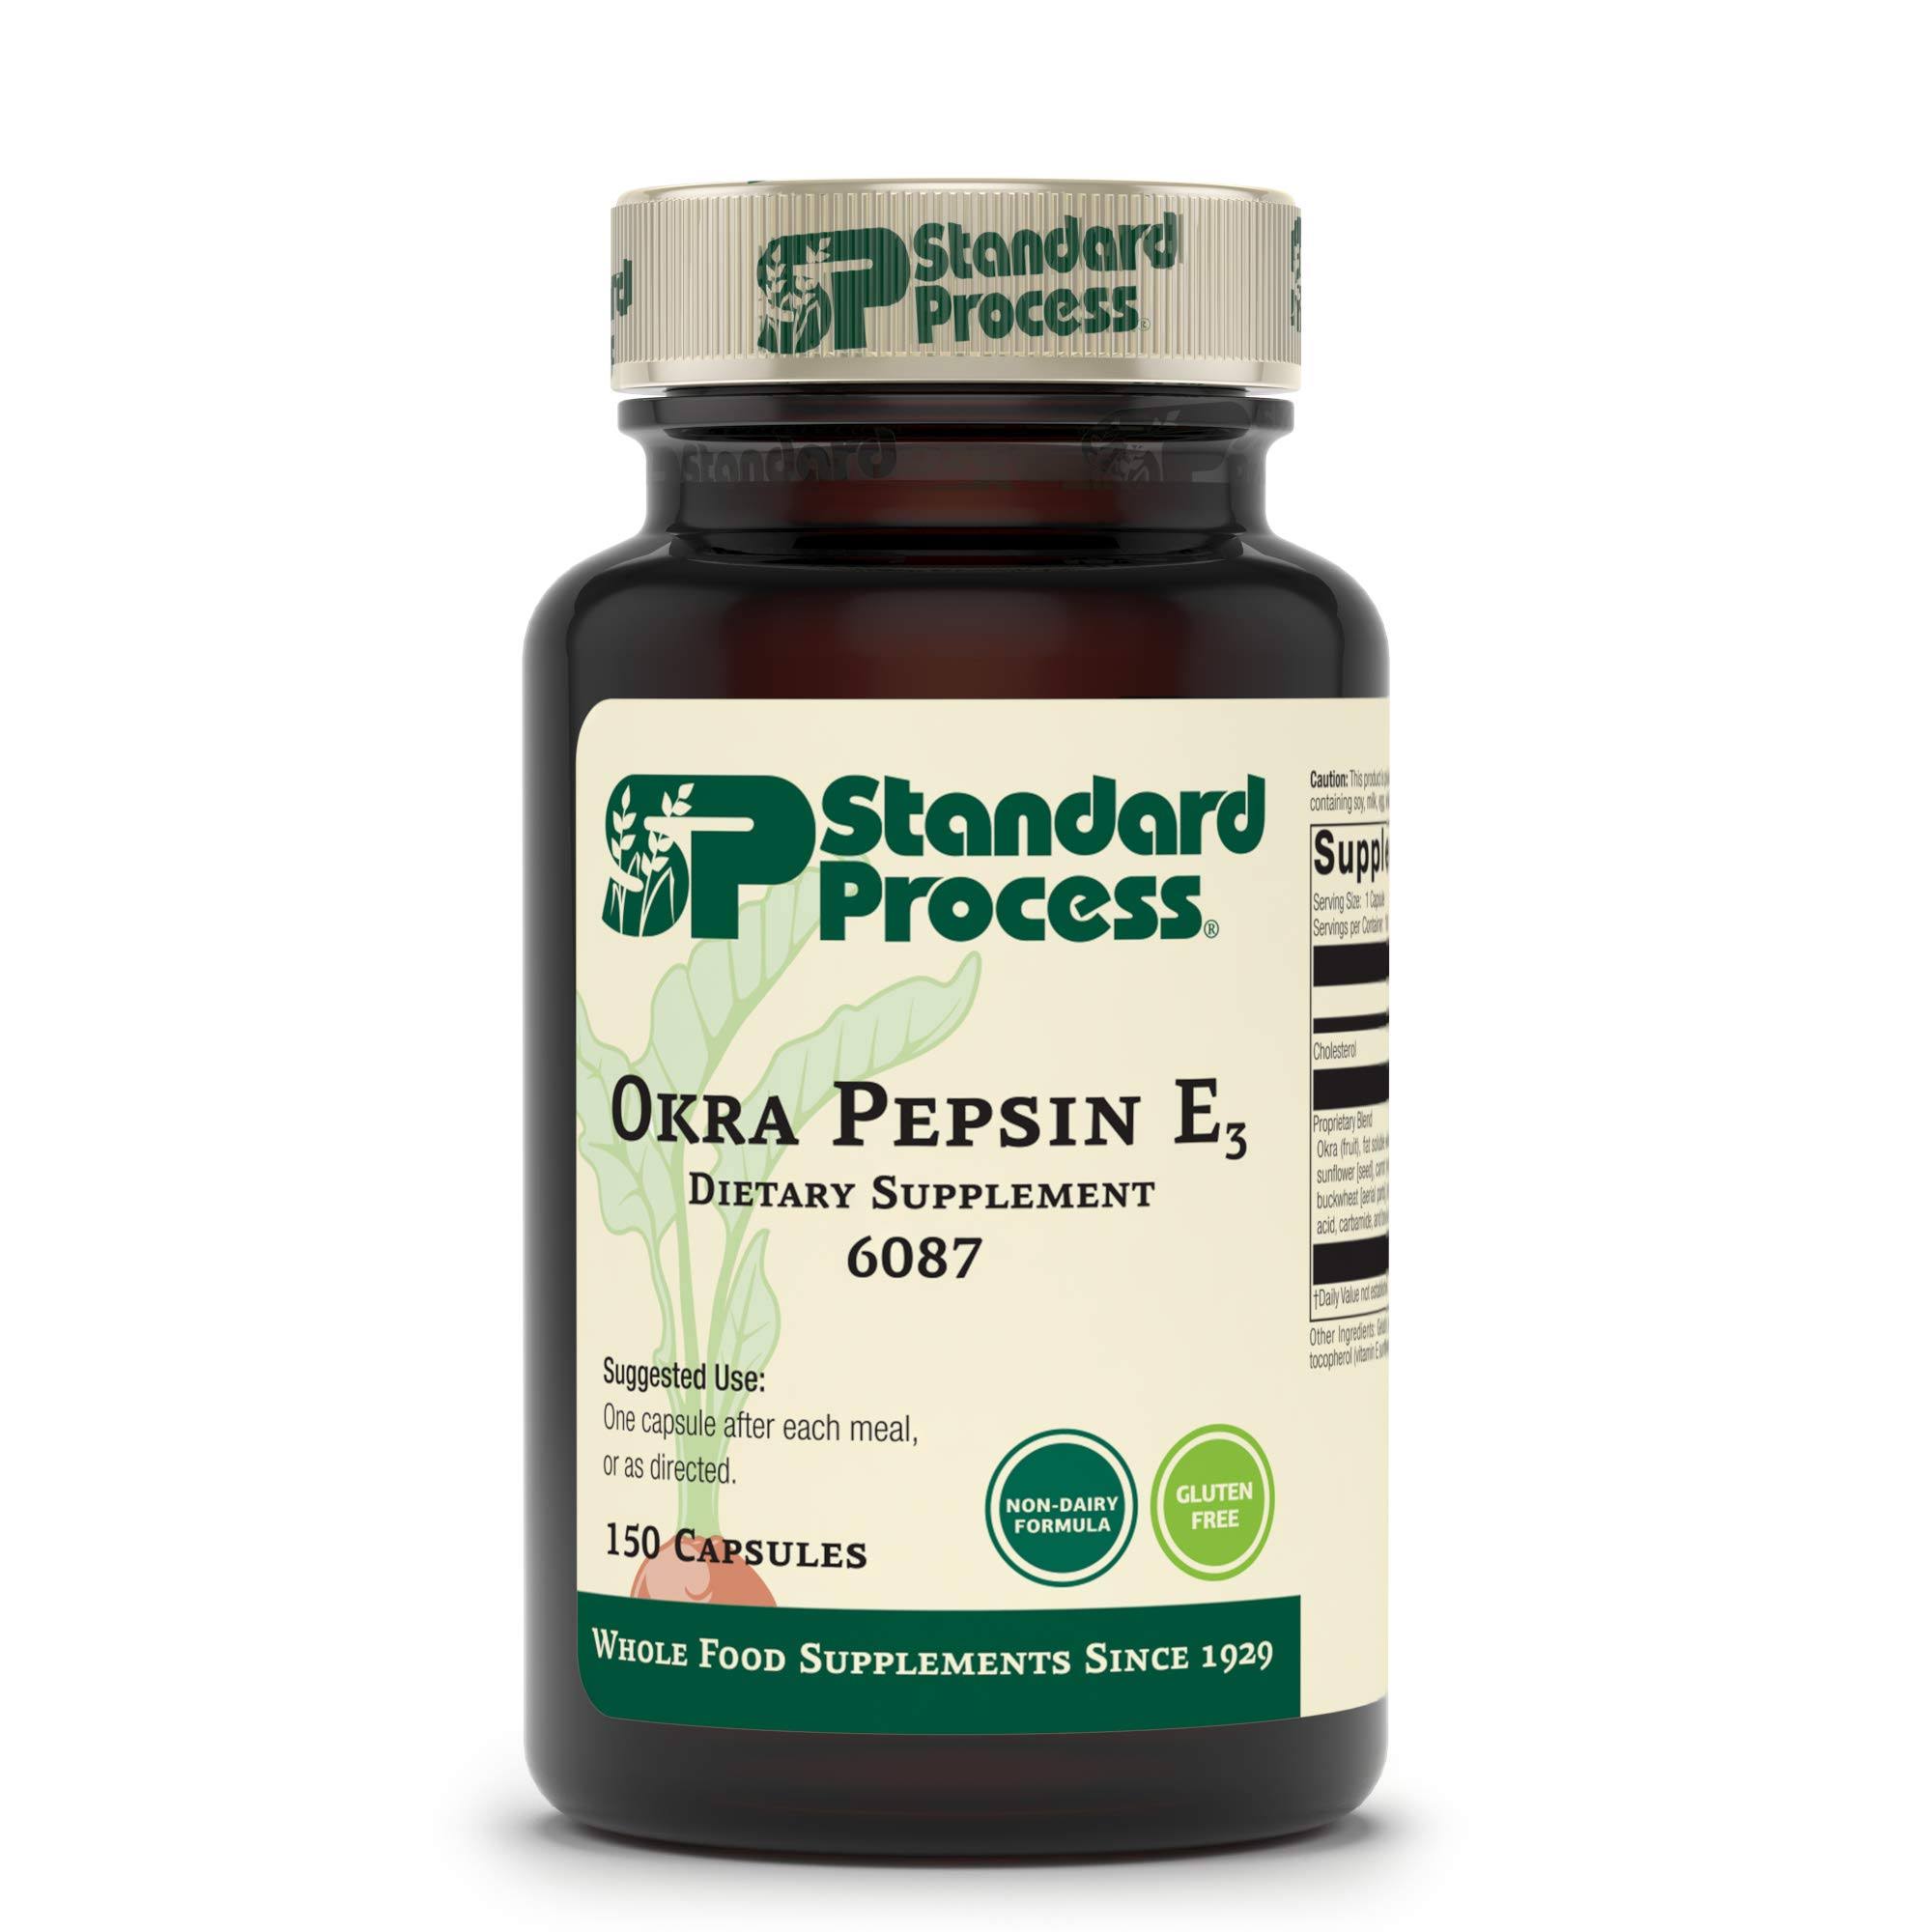 Standard Process Okra Pepsin E3 - Whole Food Digestion and Digestive